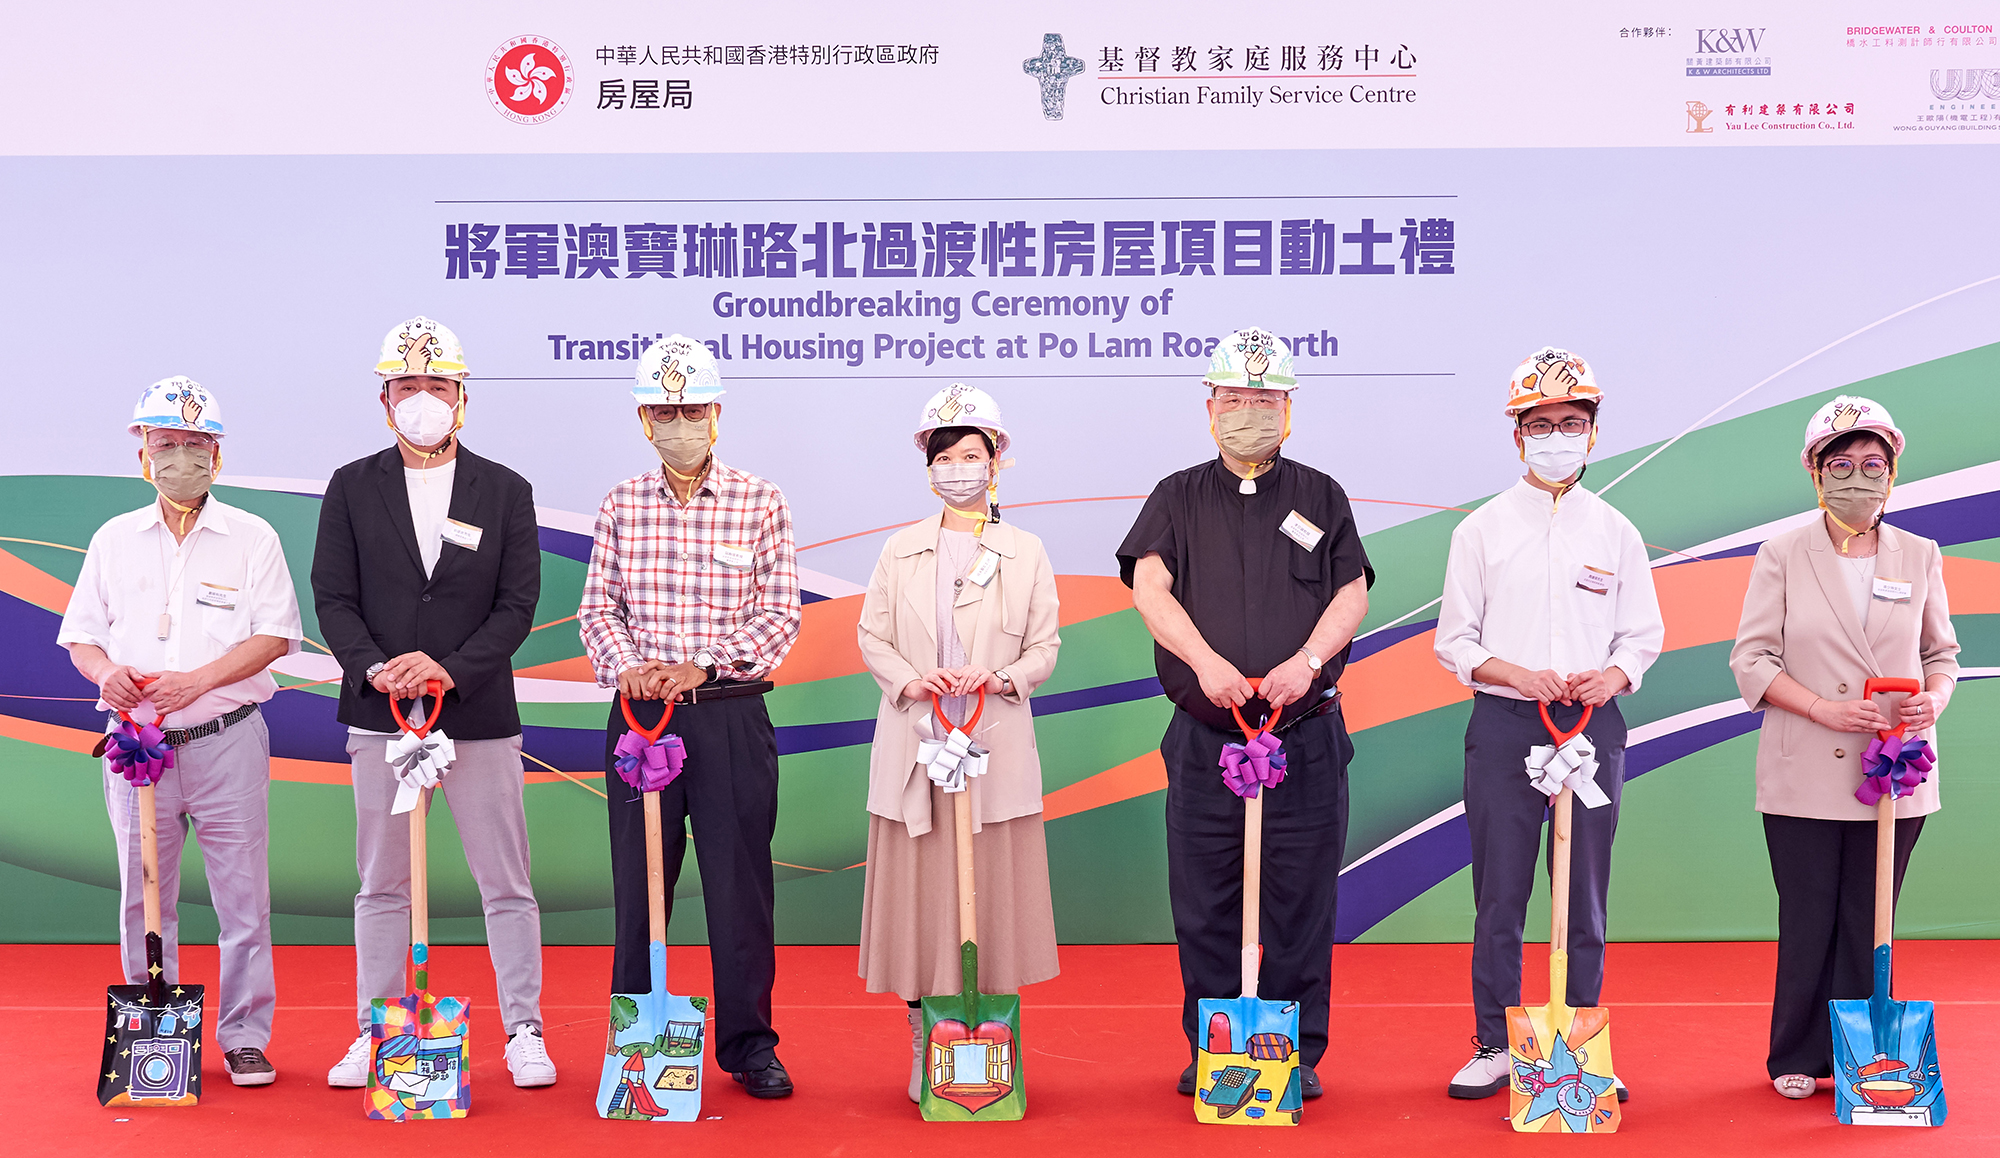 Cover Image - 香港電台 — 基督教家庭服務中心將推4個過渡房屋項目